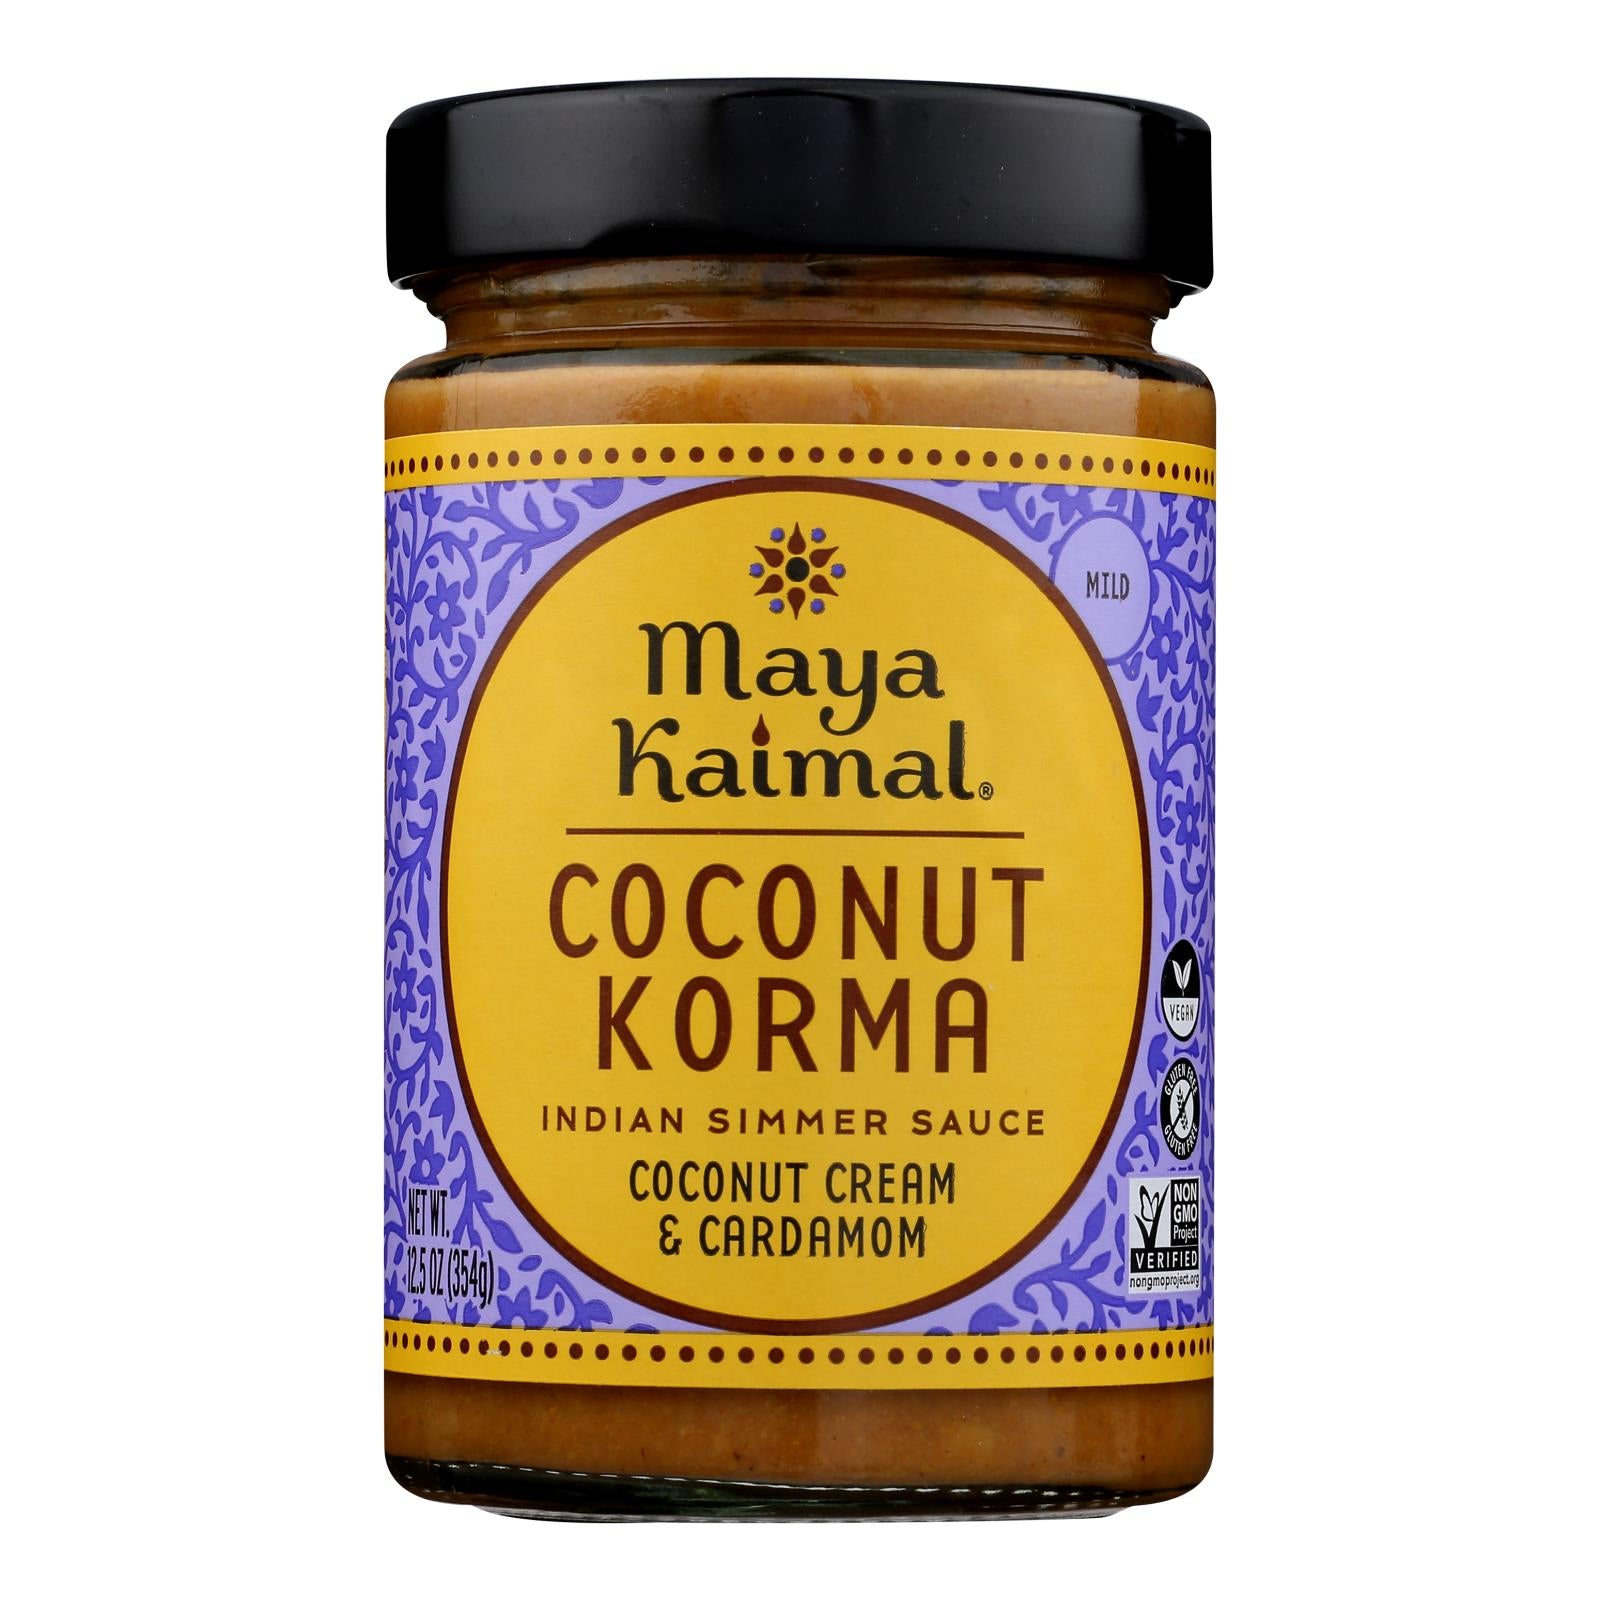 Maya Kaimal - Smmr Sauce Coconut Korma - Case of 6 - 12.5 OZ